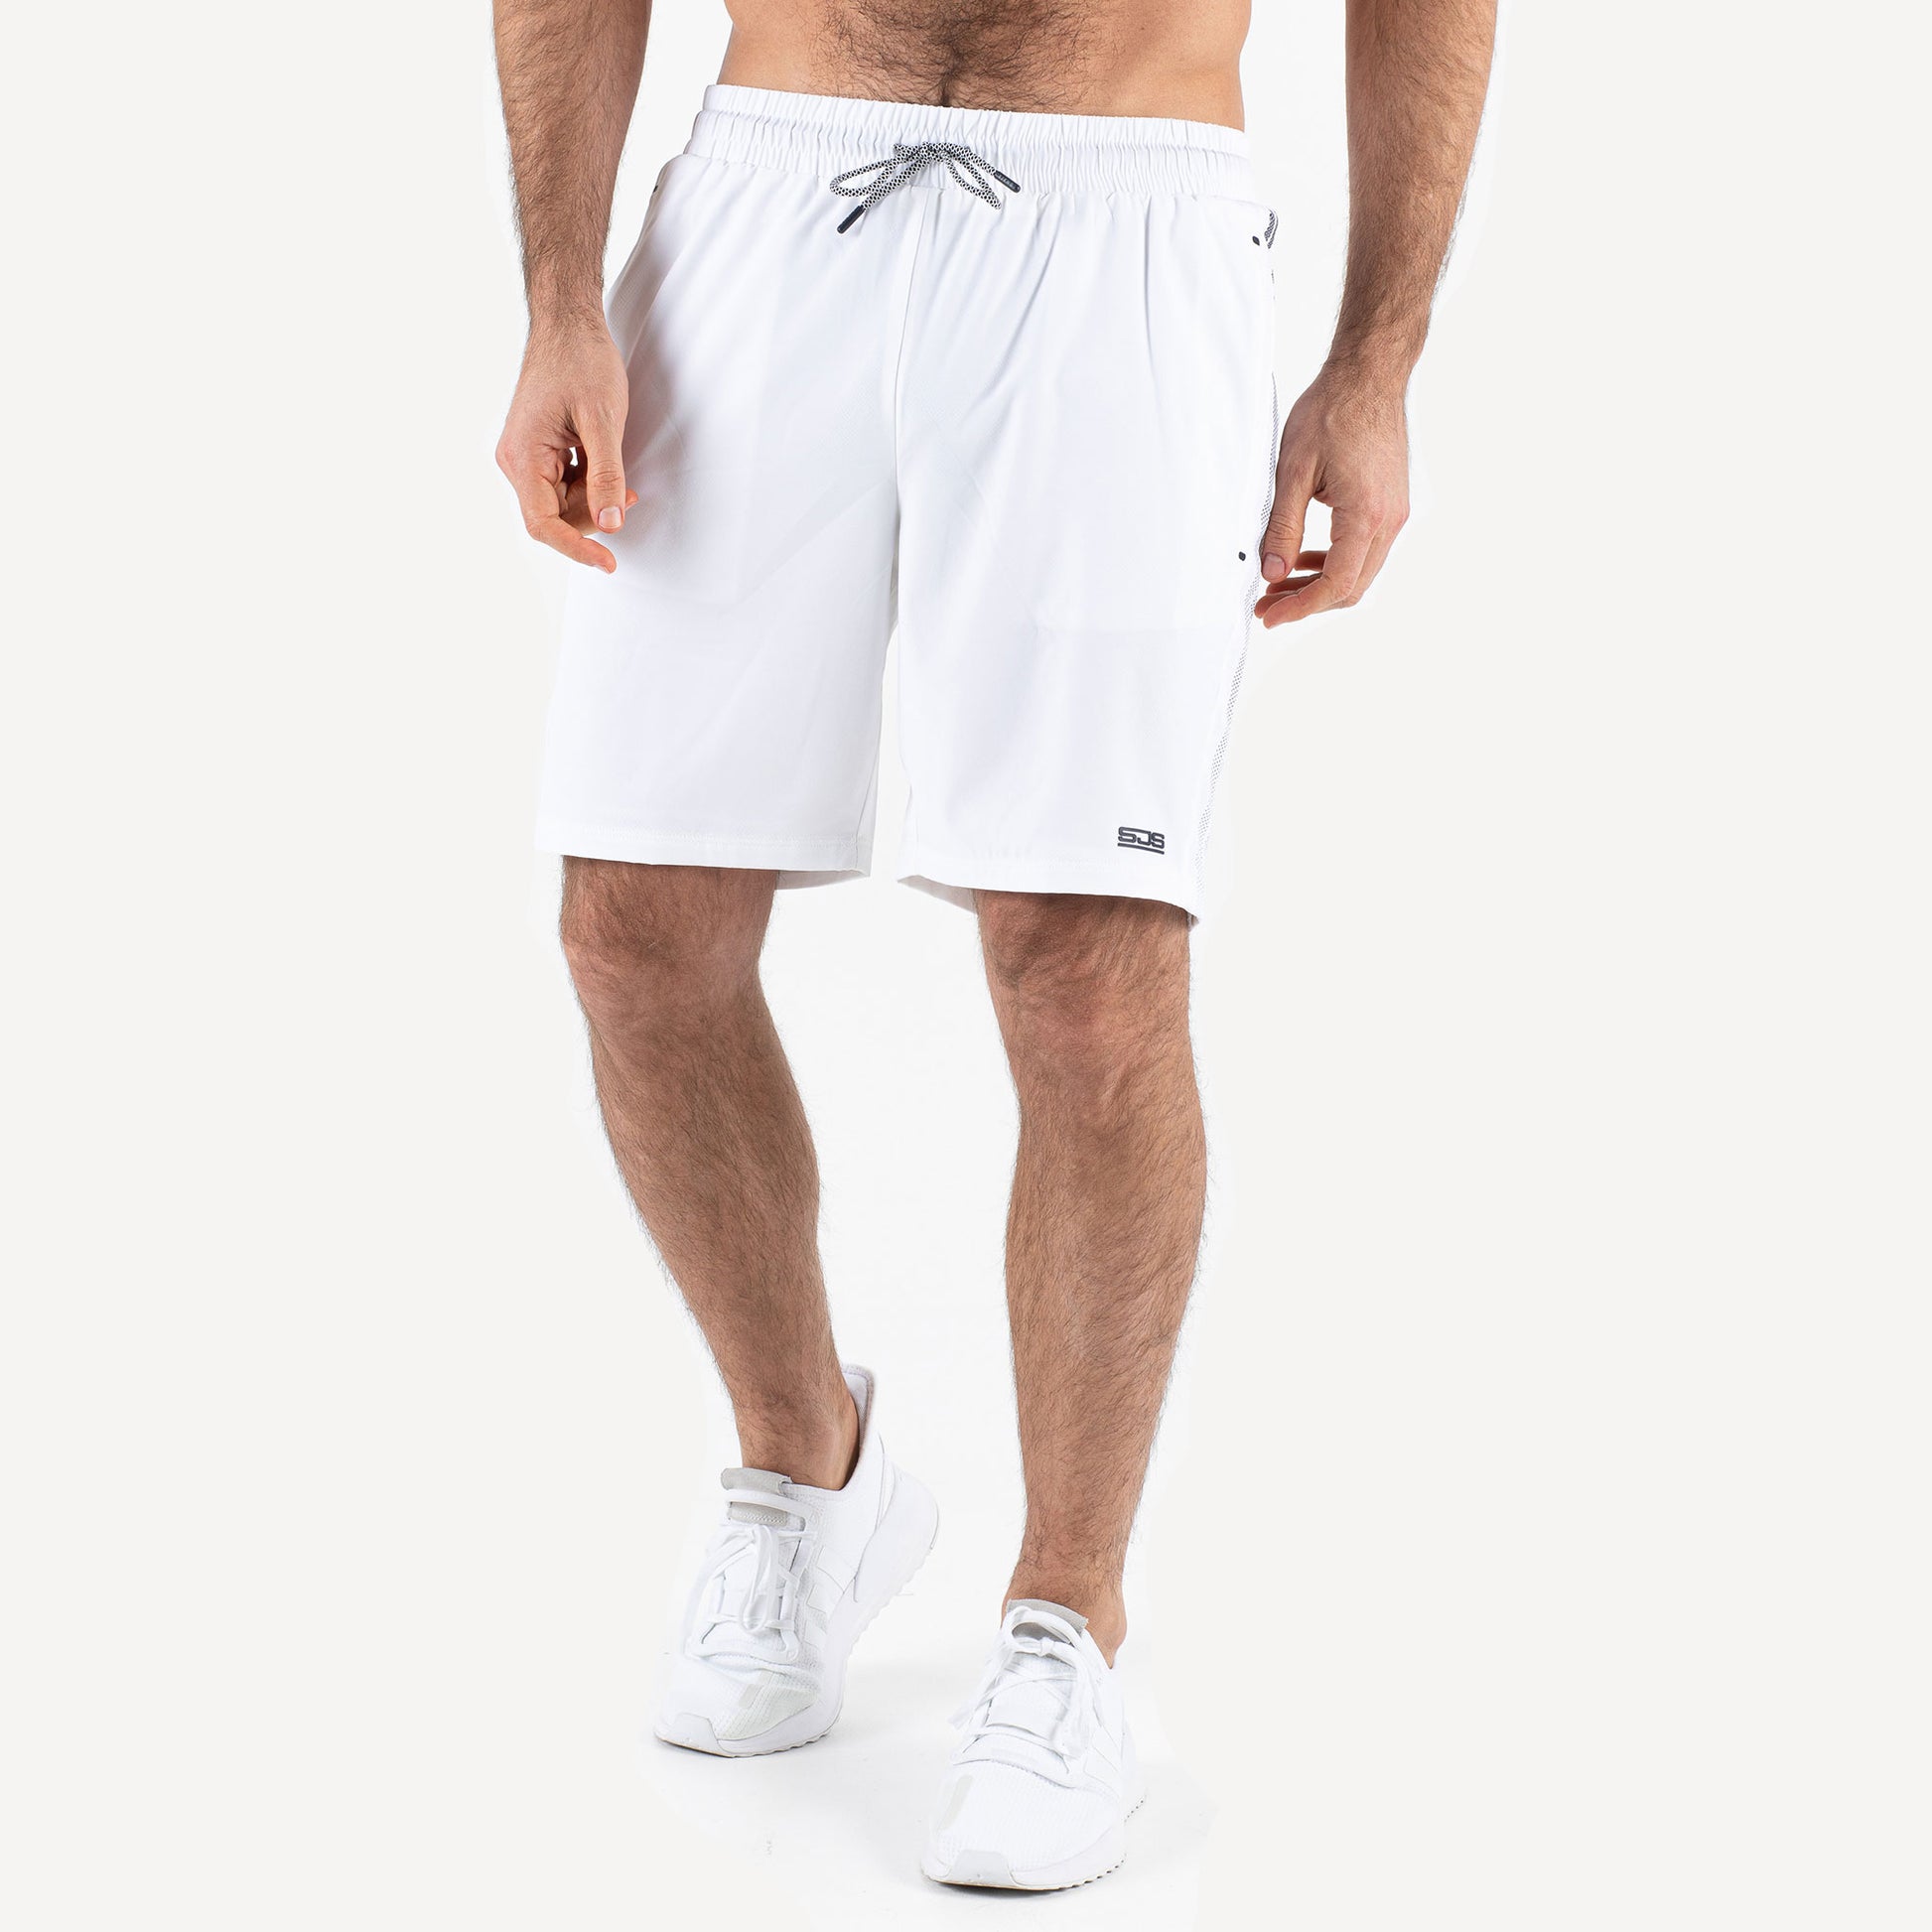 Sjeng Sports Shelby Men's Tennis Shorts White (1)